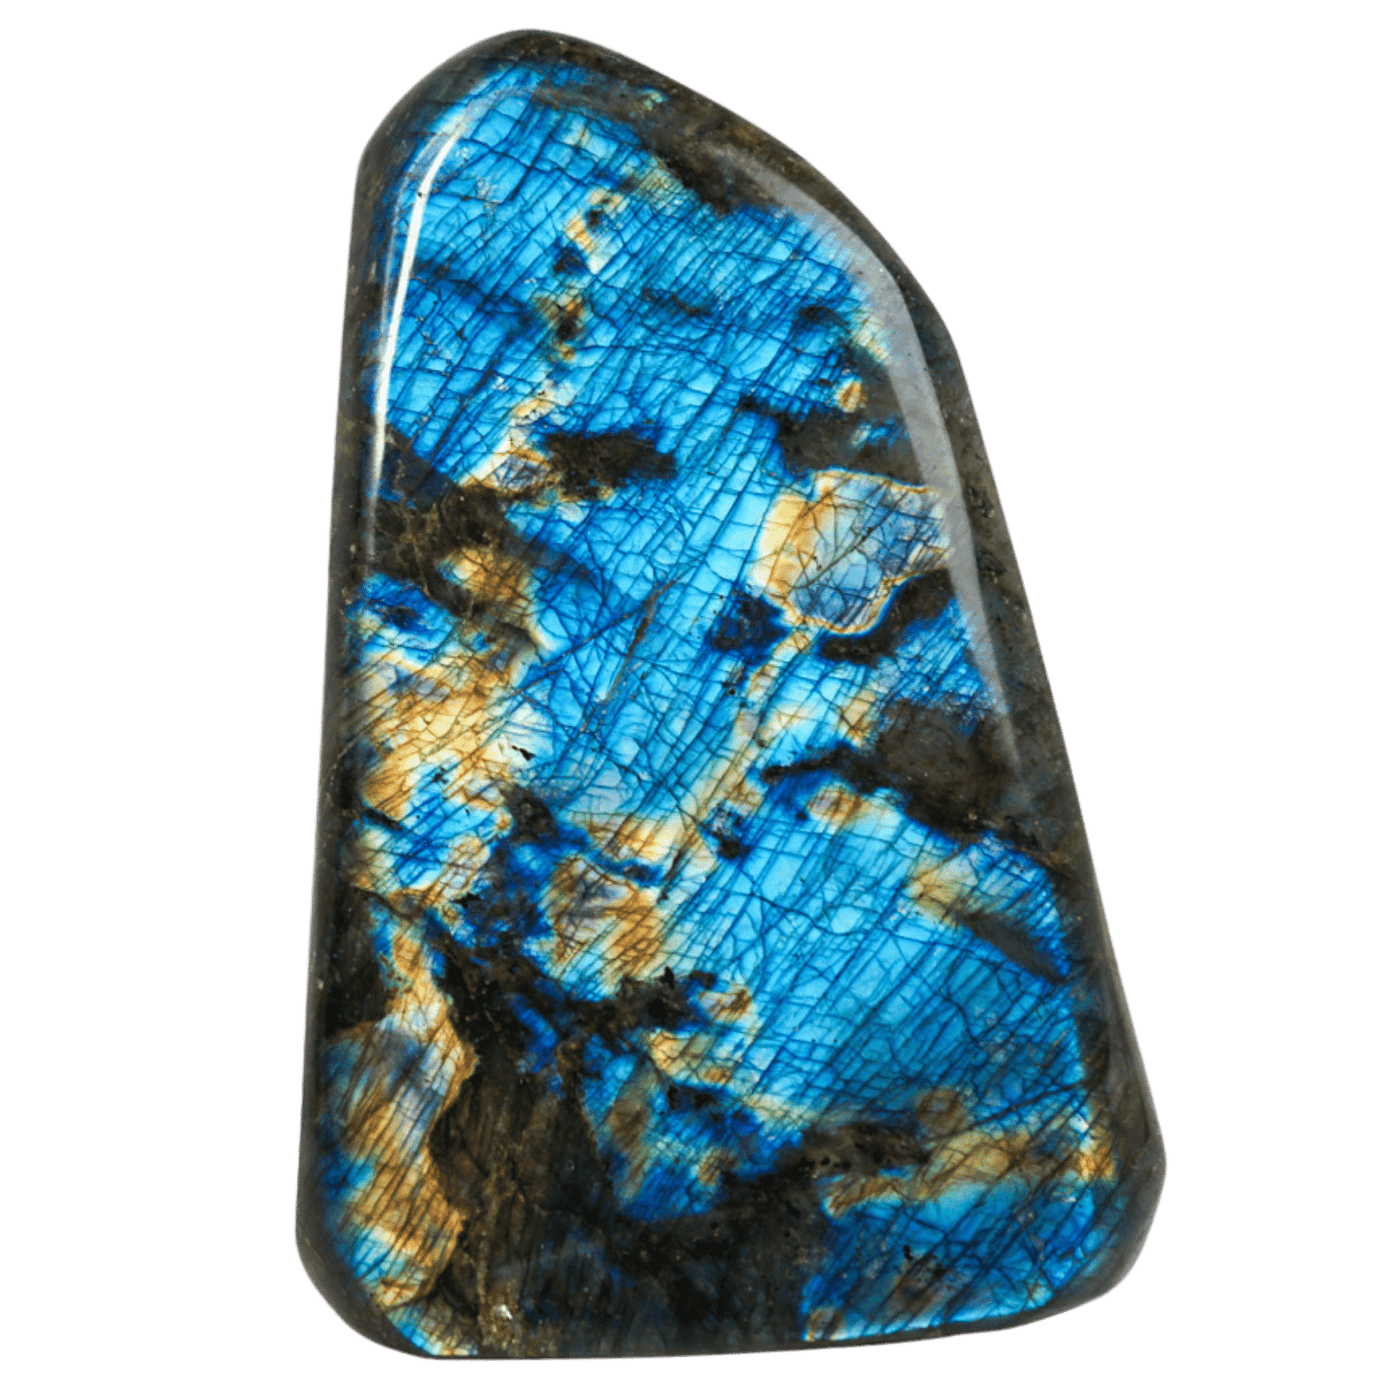 OOAK Tucson Find Labradorite Freeform Crystal